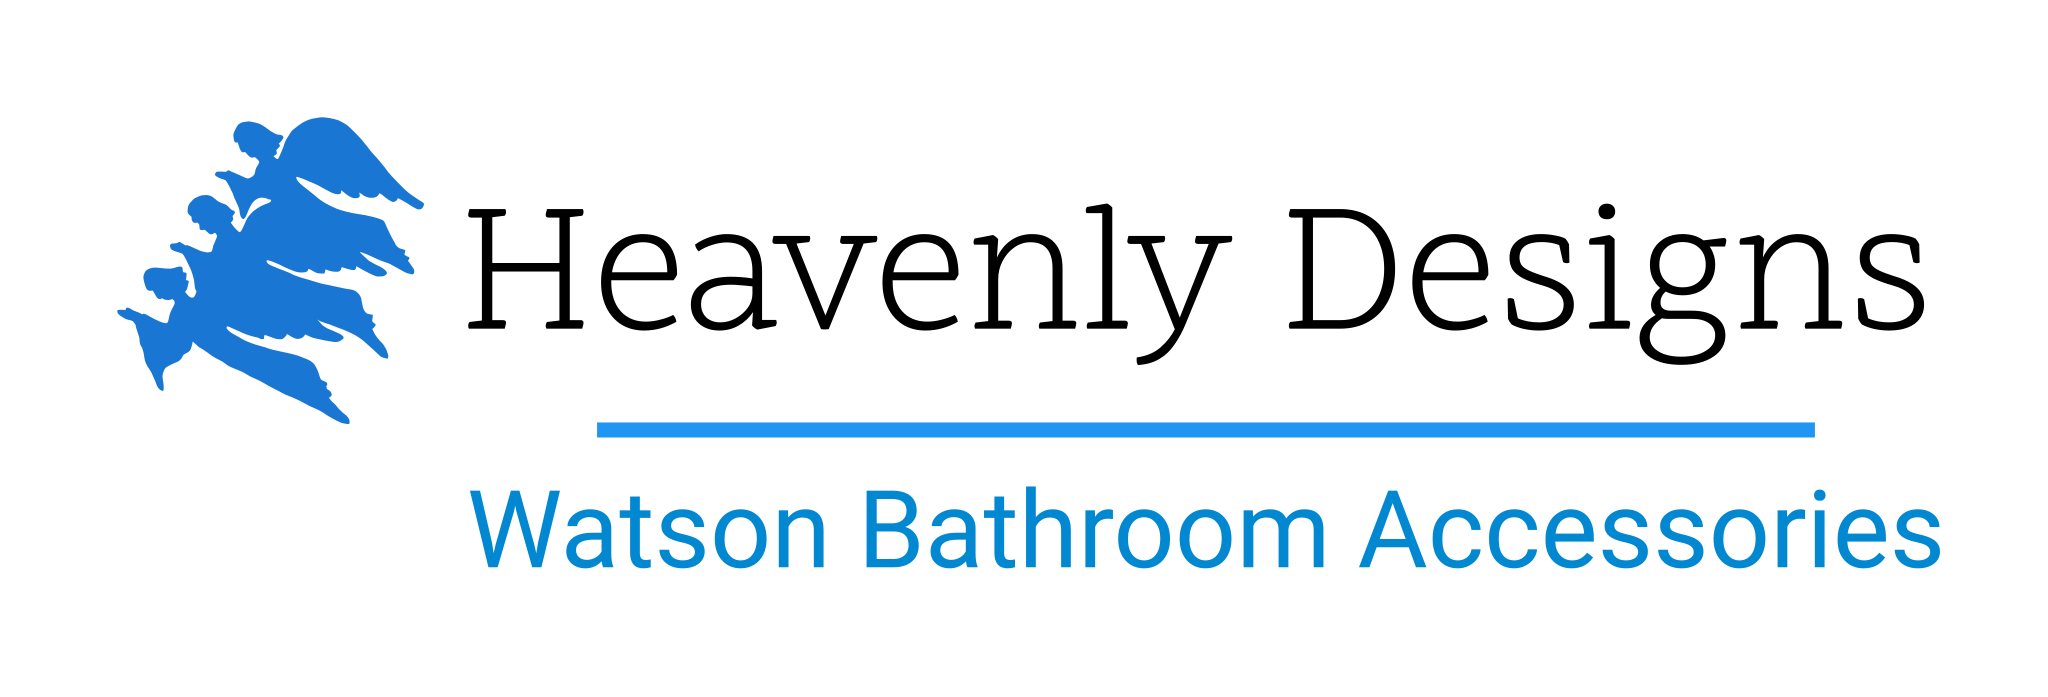 Bathroom Accessories – Heavenly Designs Watson Bathroom Accessories